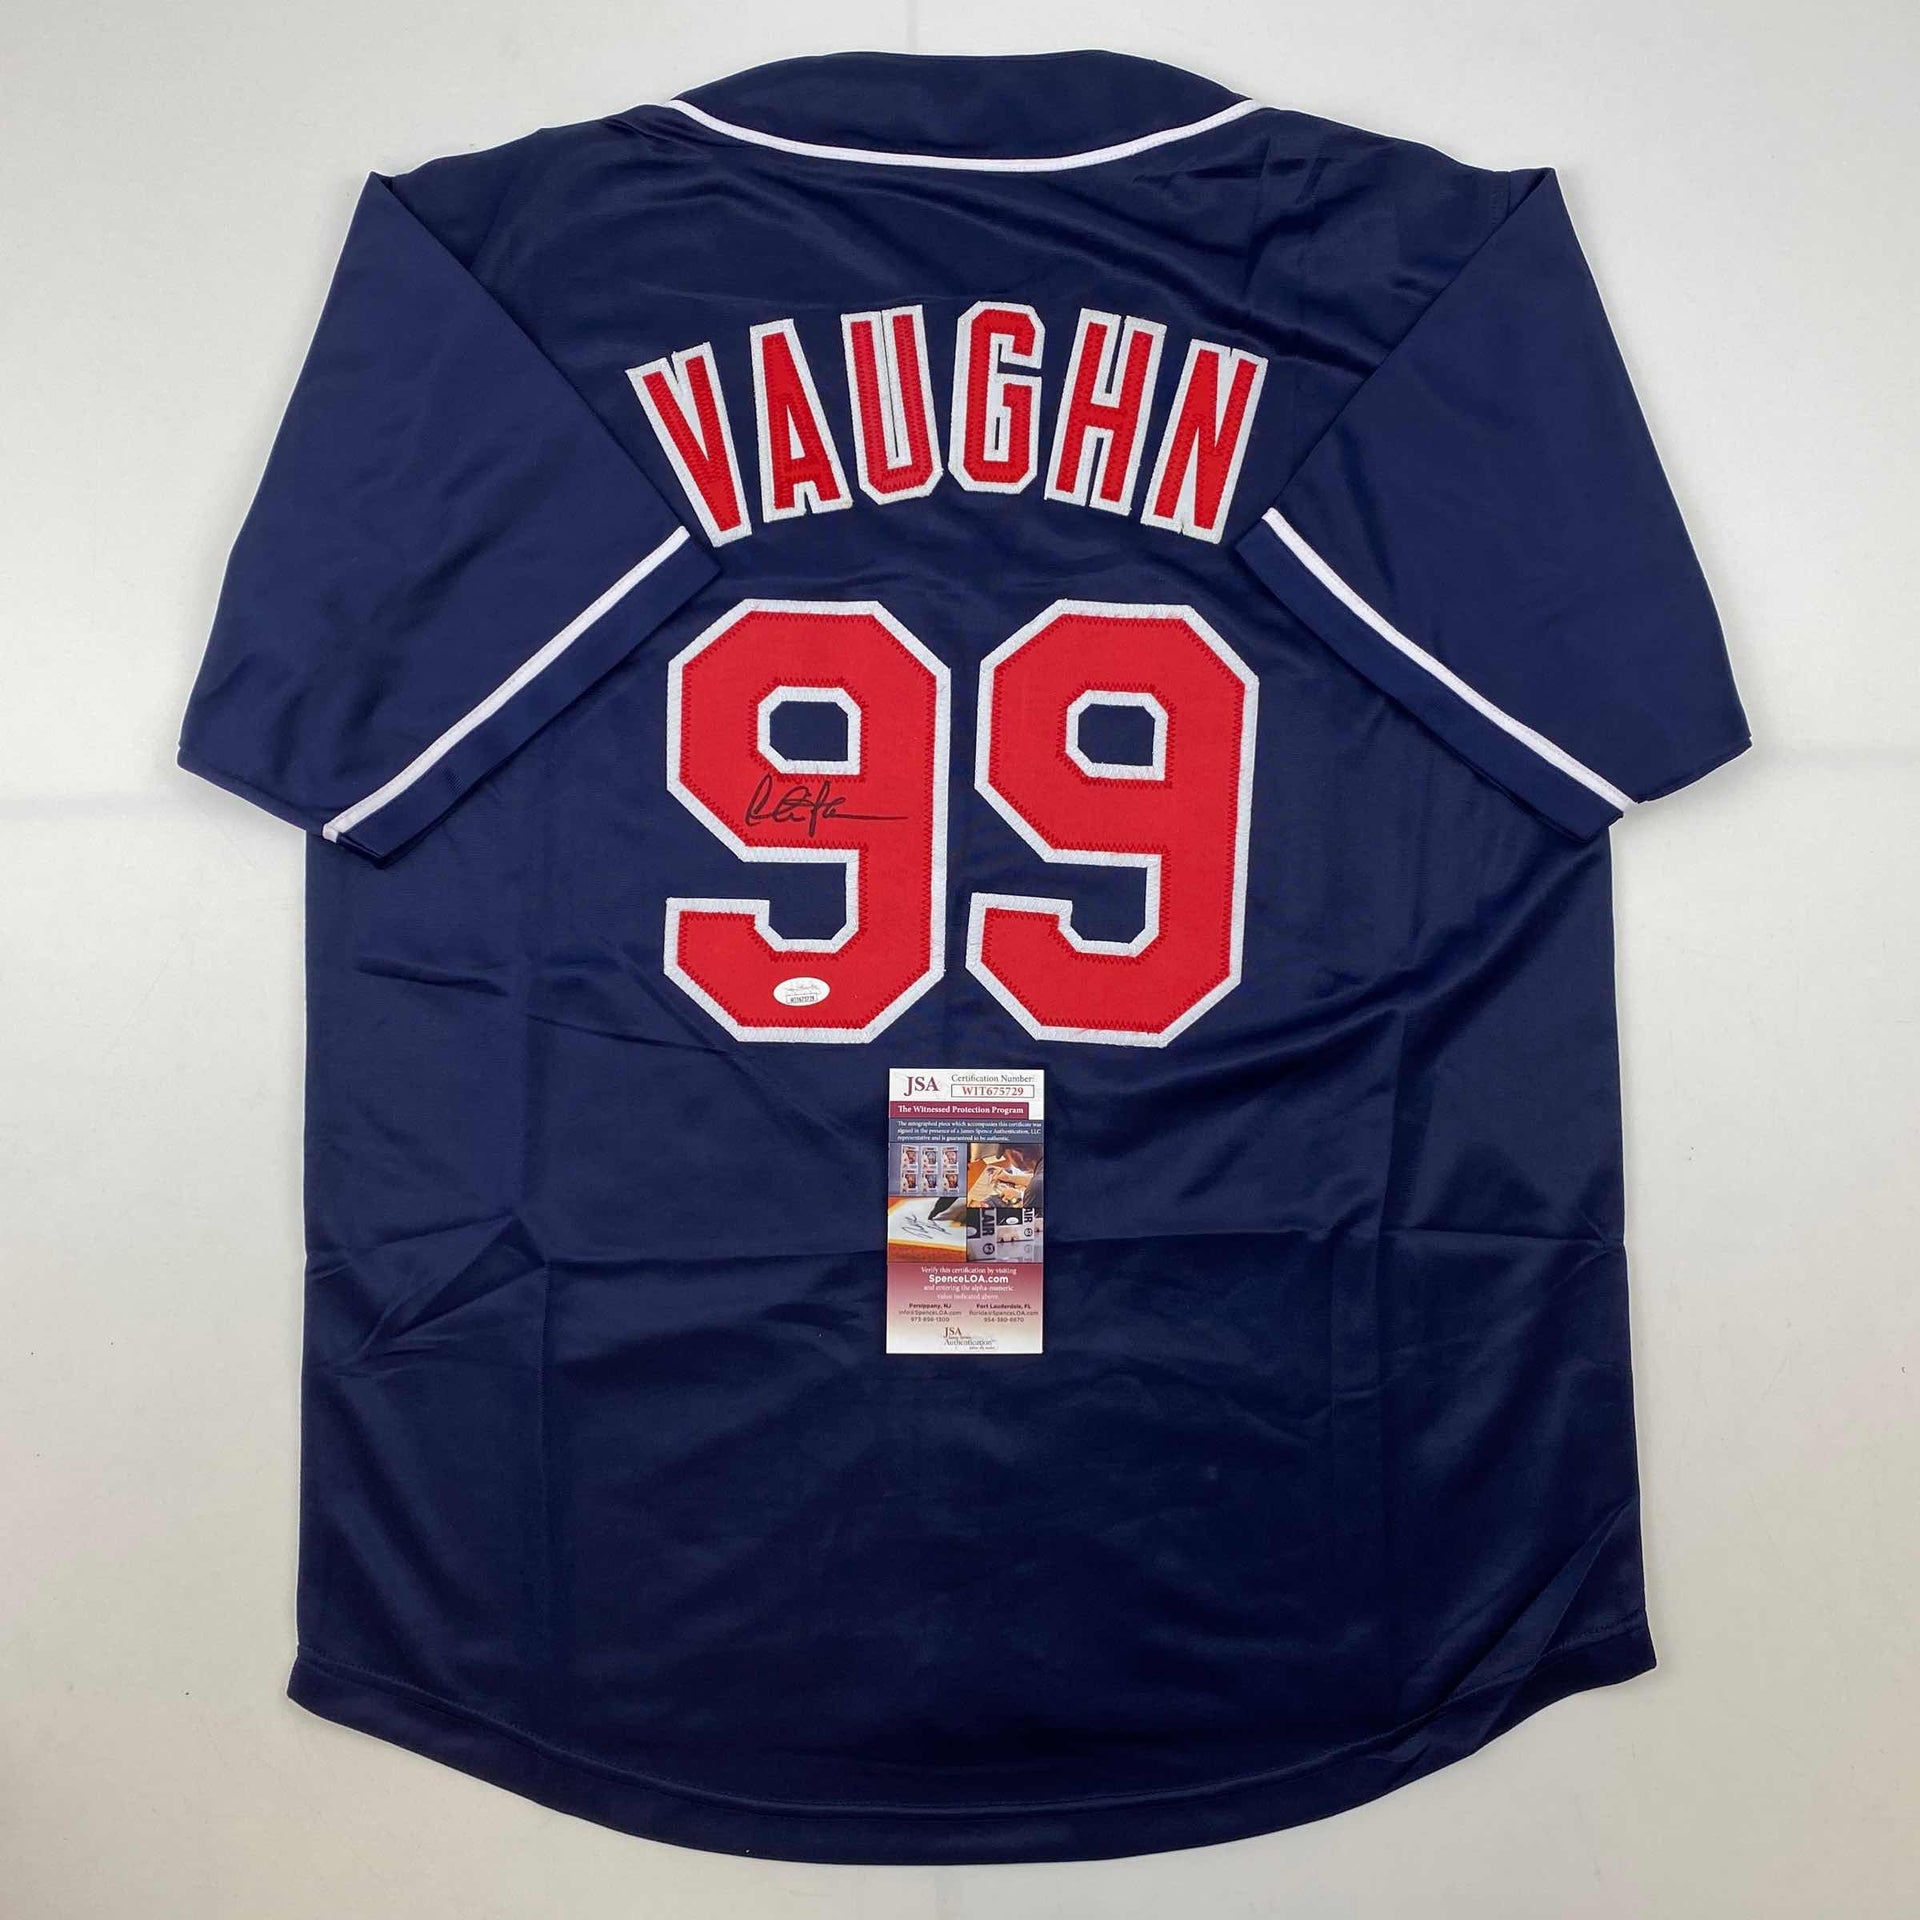 Ricky Vaughn from Major League